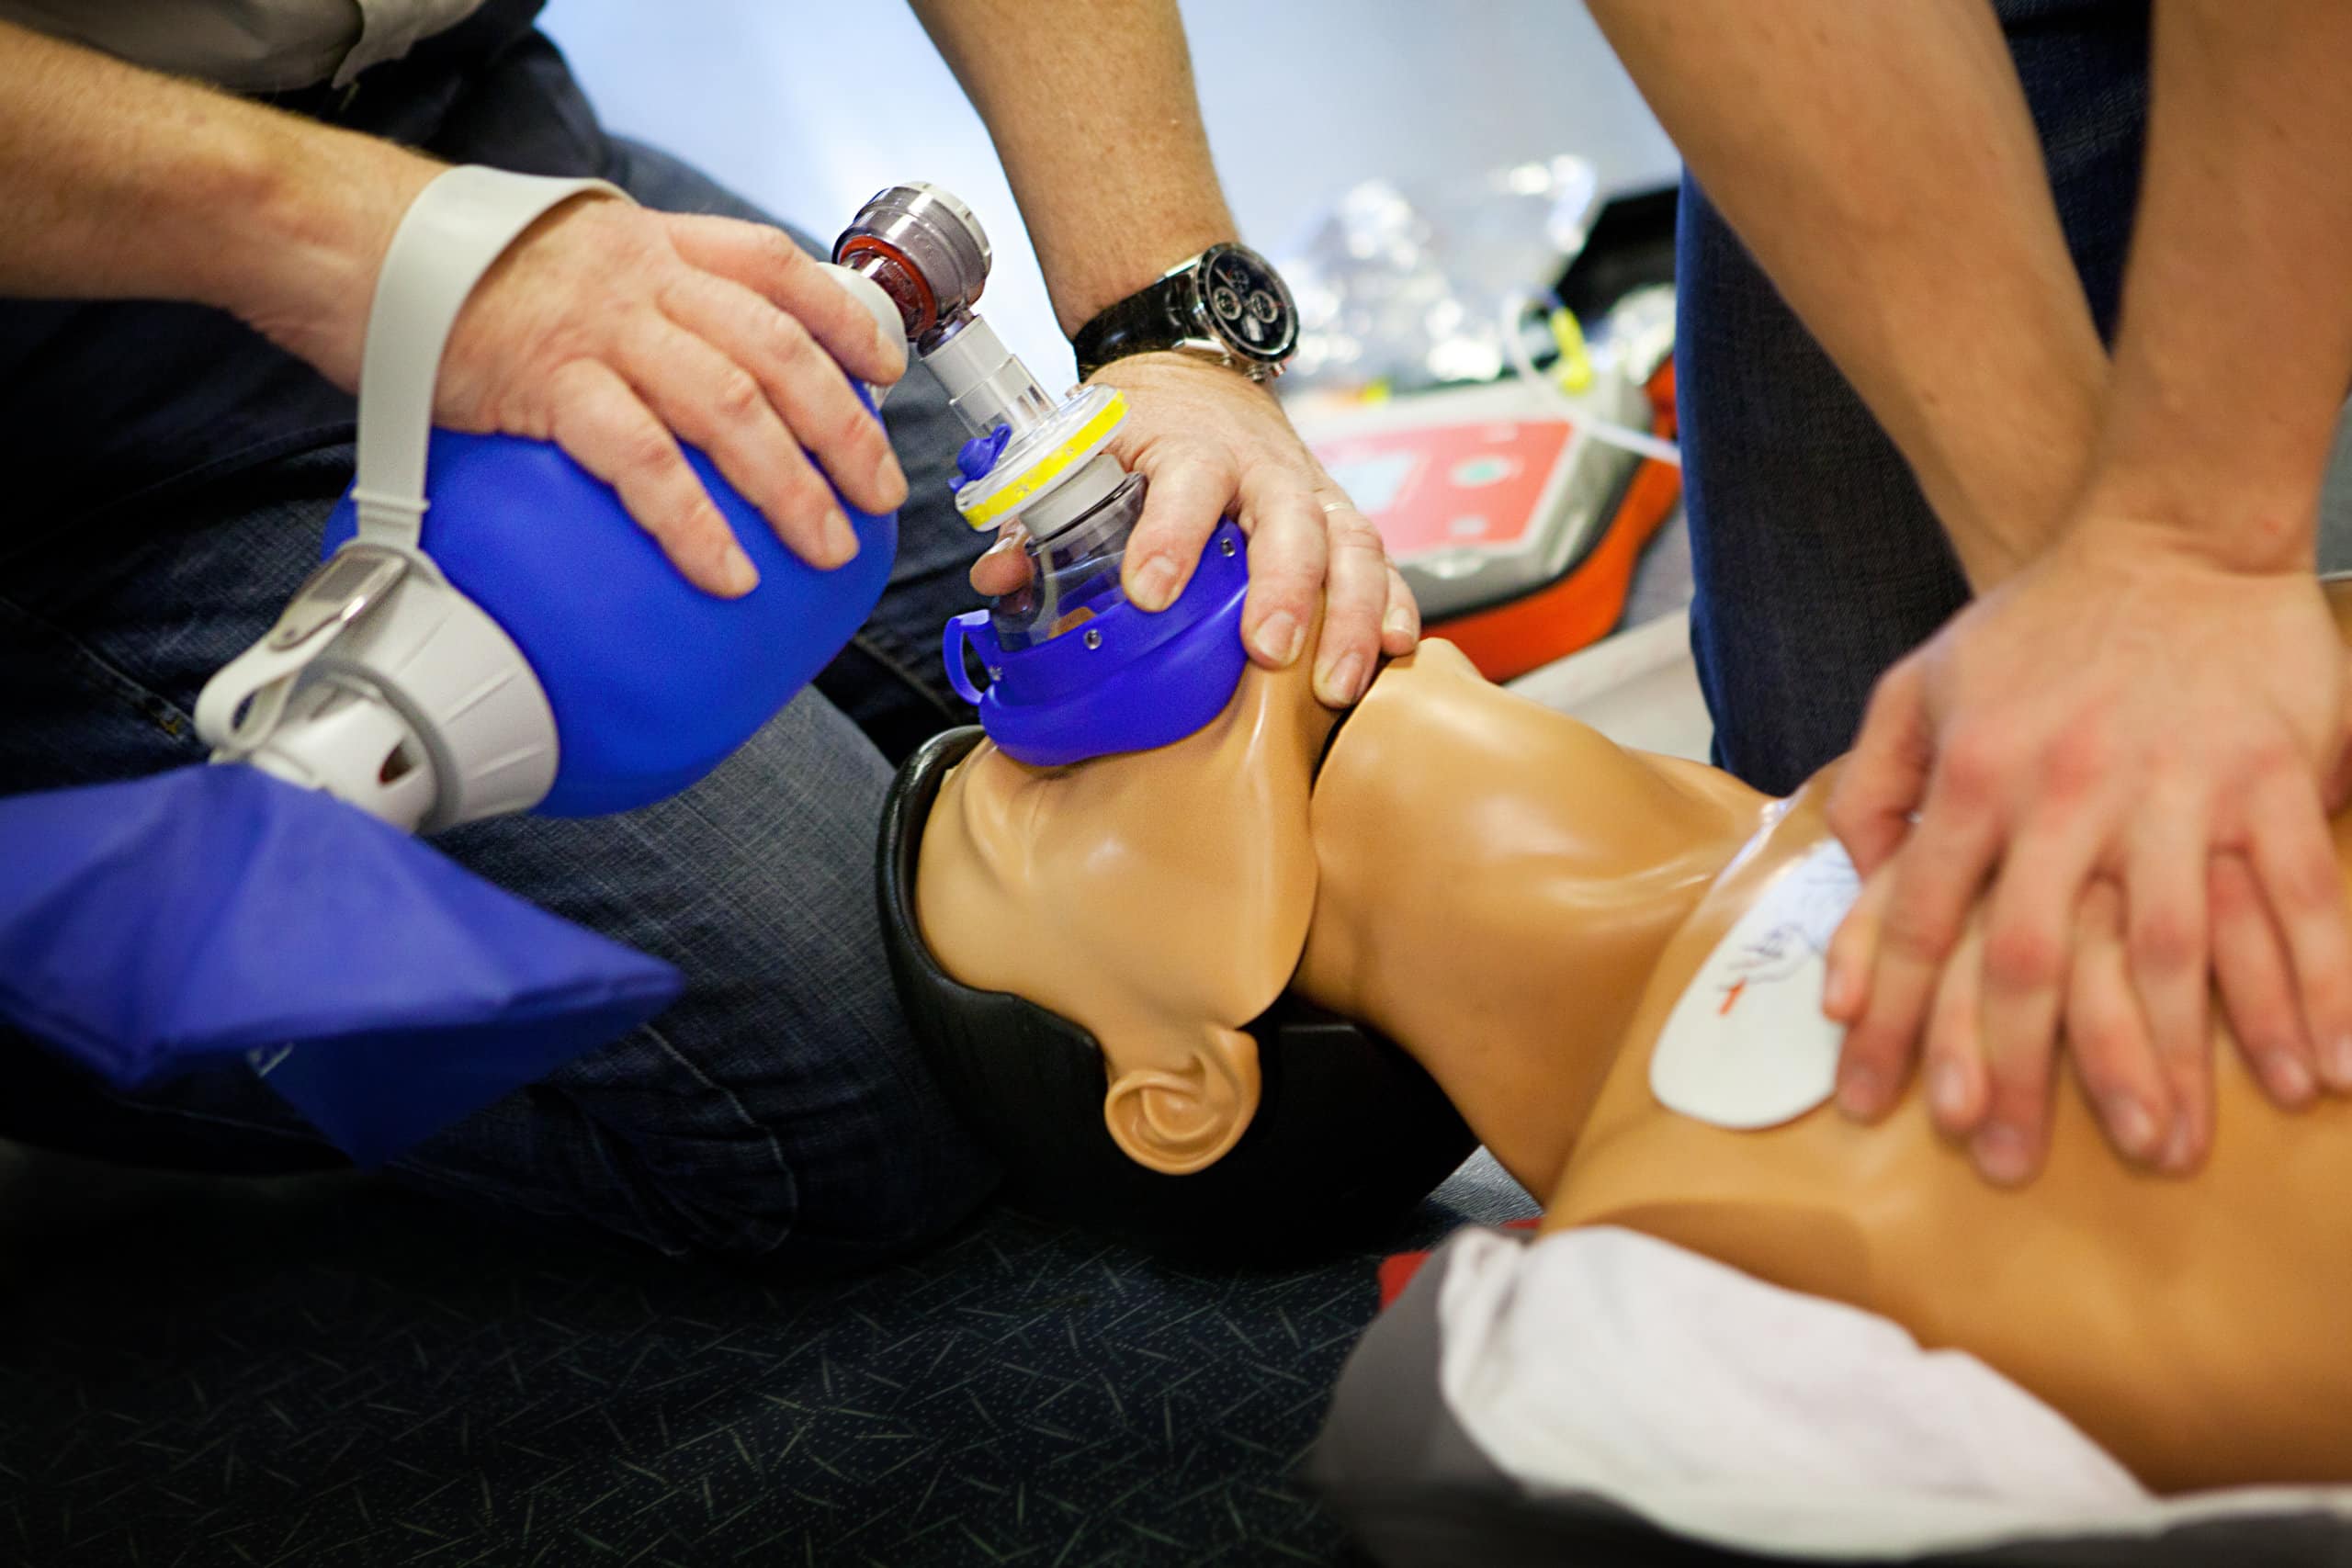 : using a manual resuscitator bag on a model